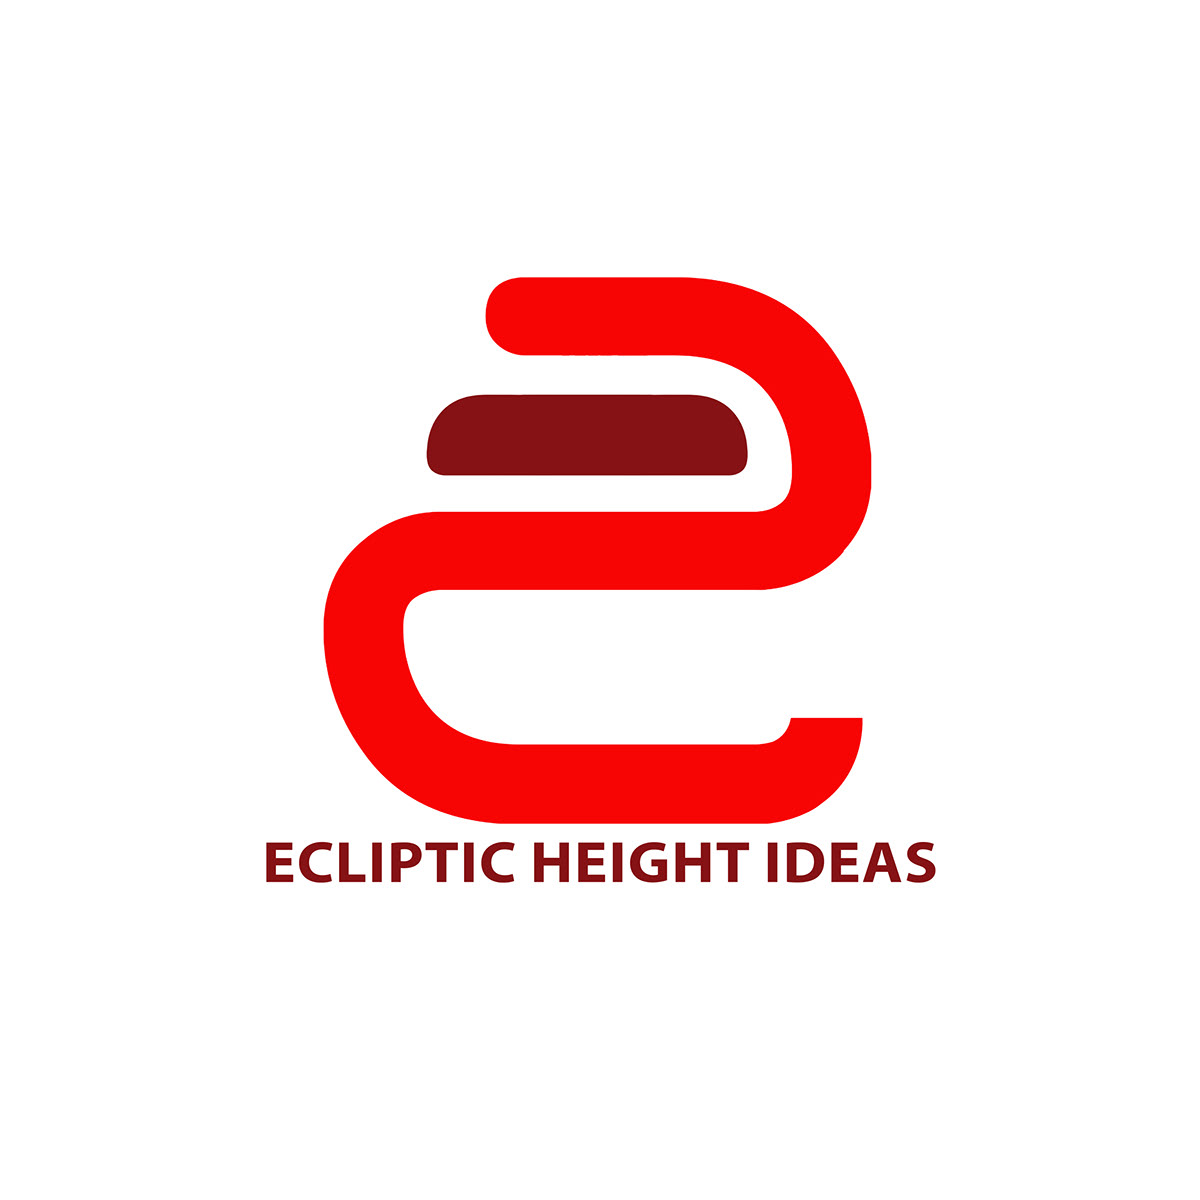 Ecliptic Hight Ideas